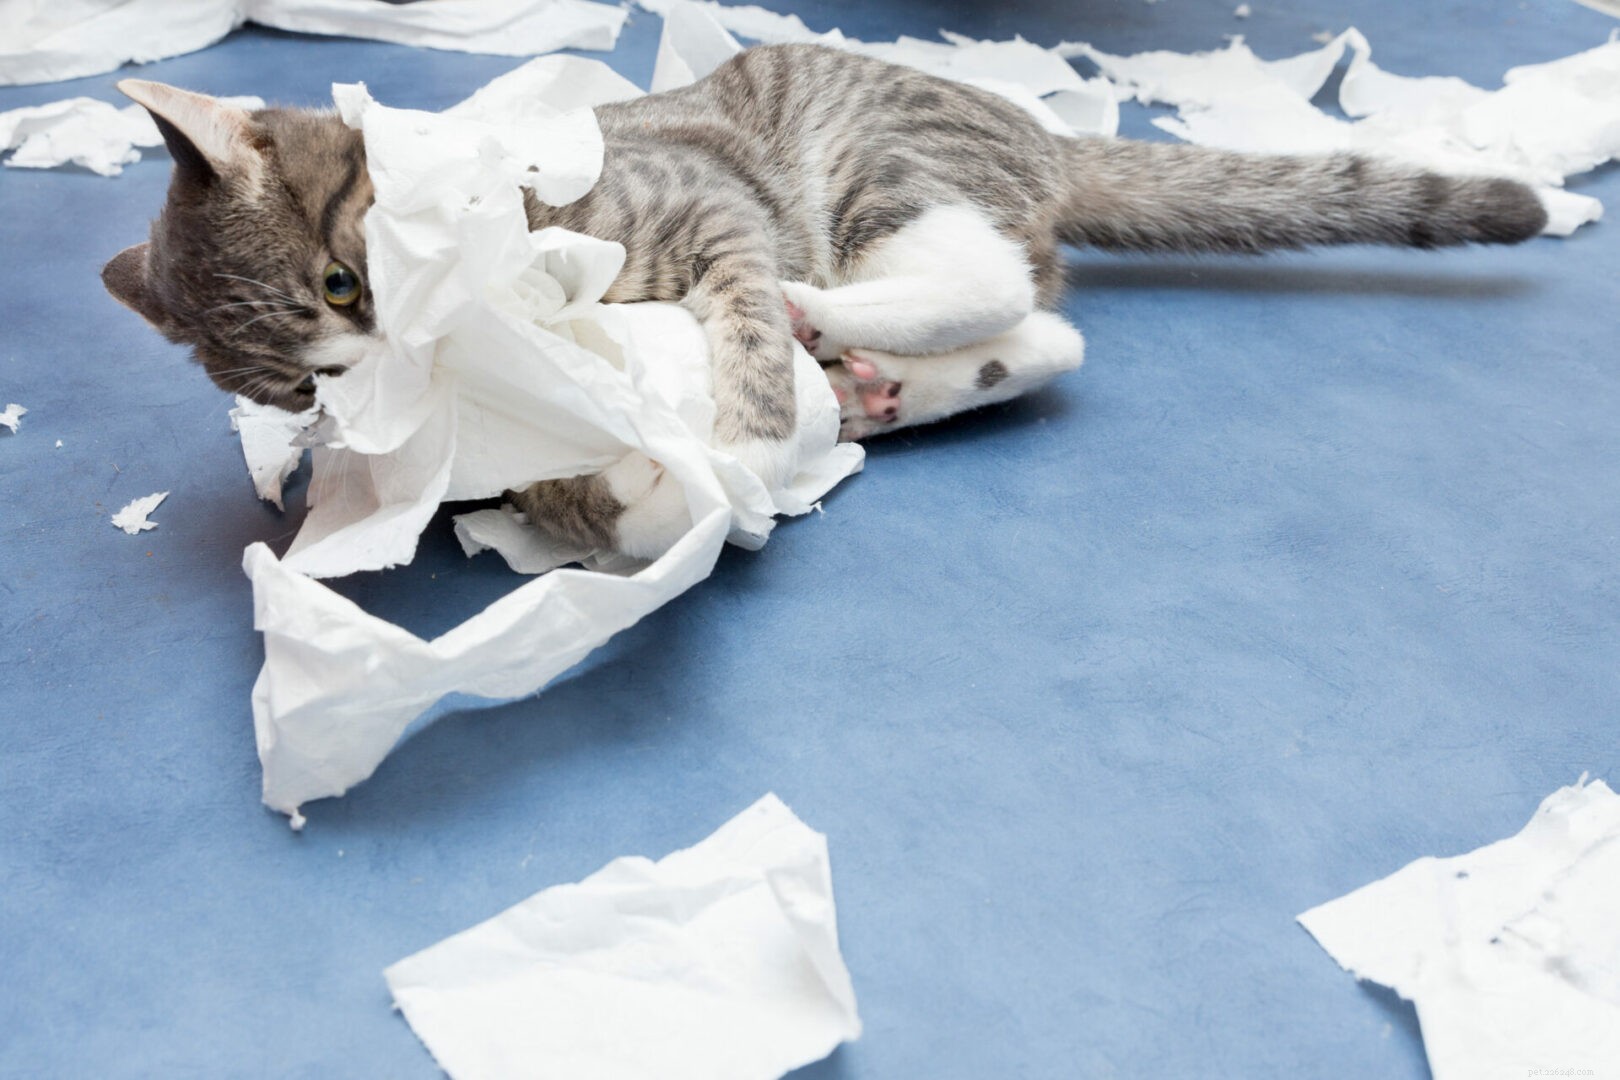 Waarom knoeien katten graag met toiletpapier?